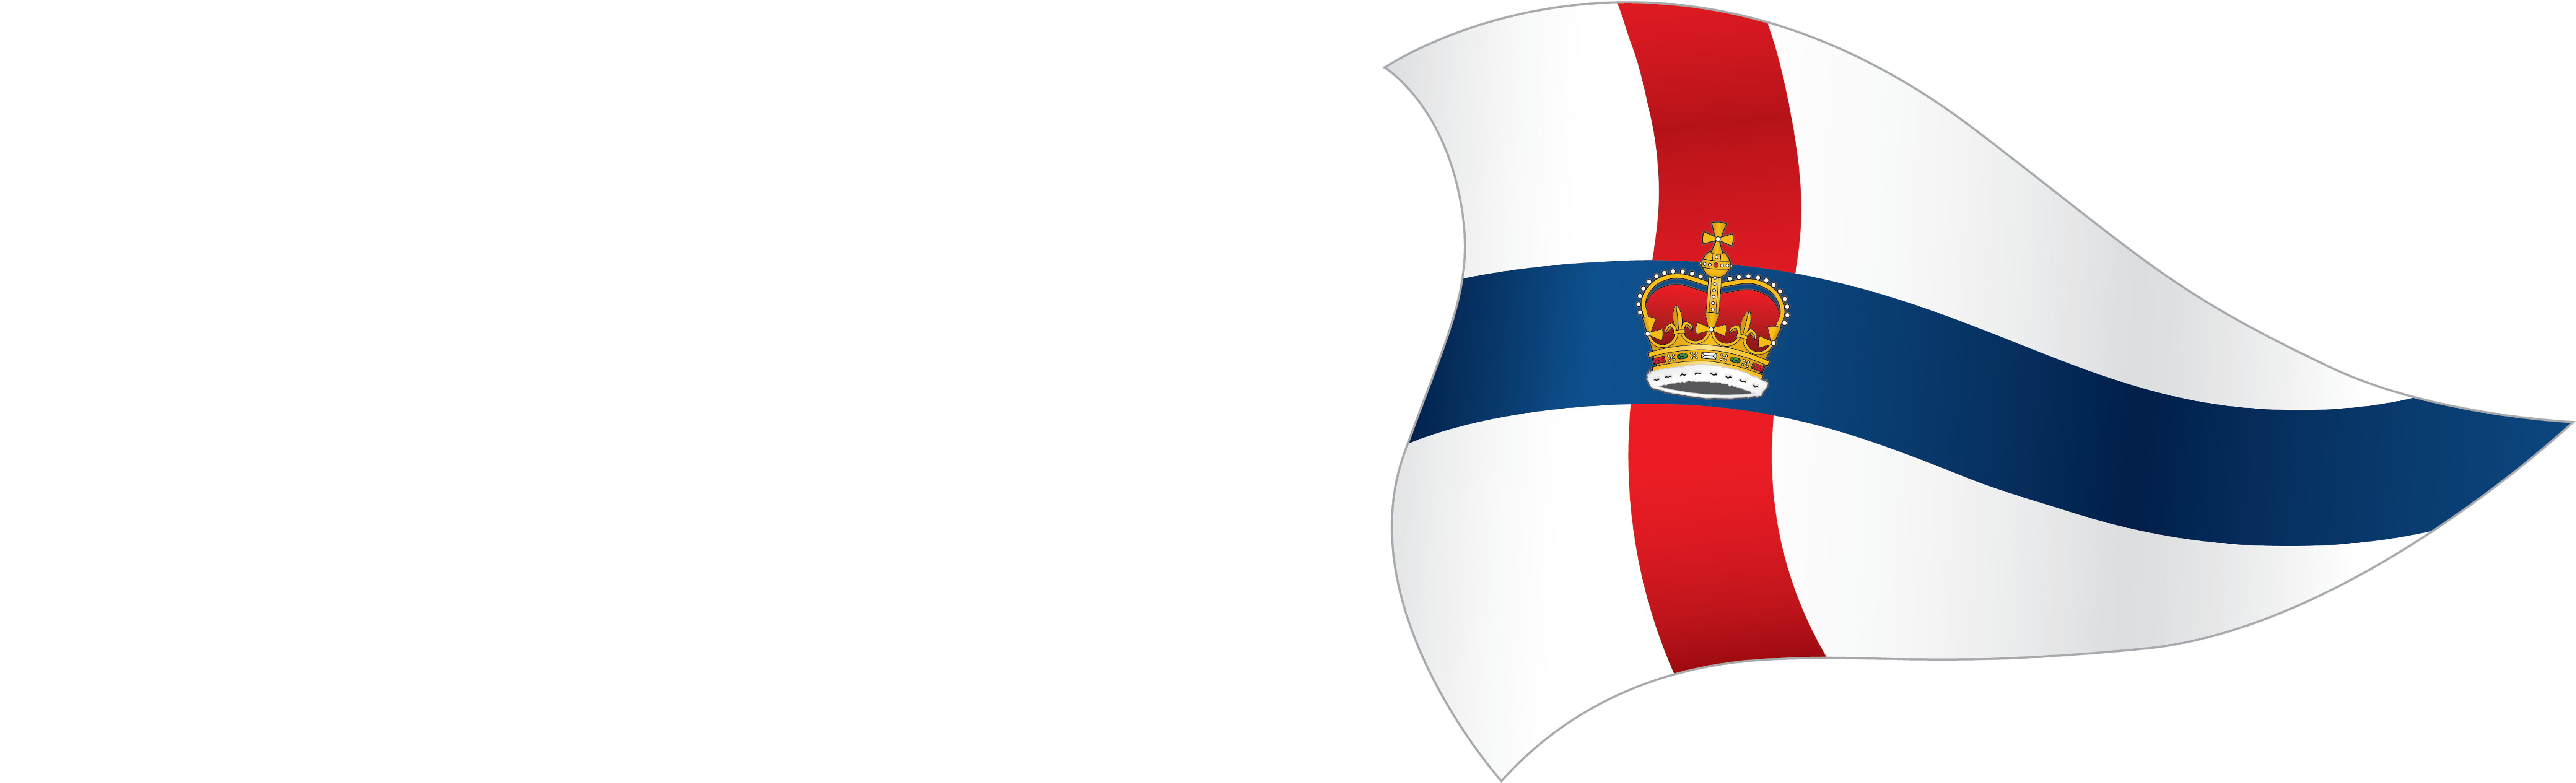 Logo - Royal Yacht Club Of Tasmania (6711x2326)